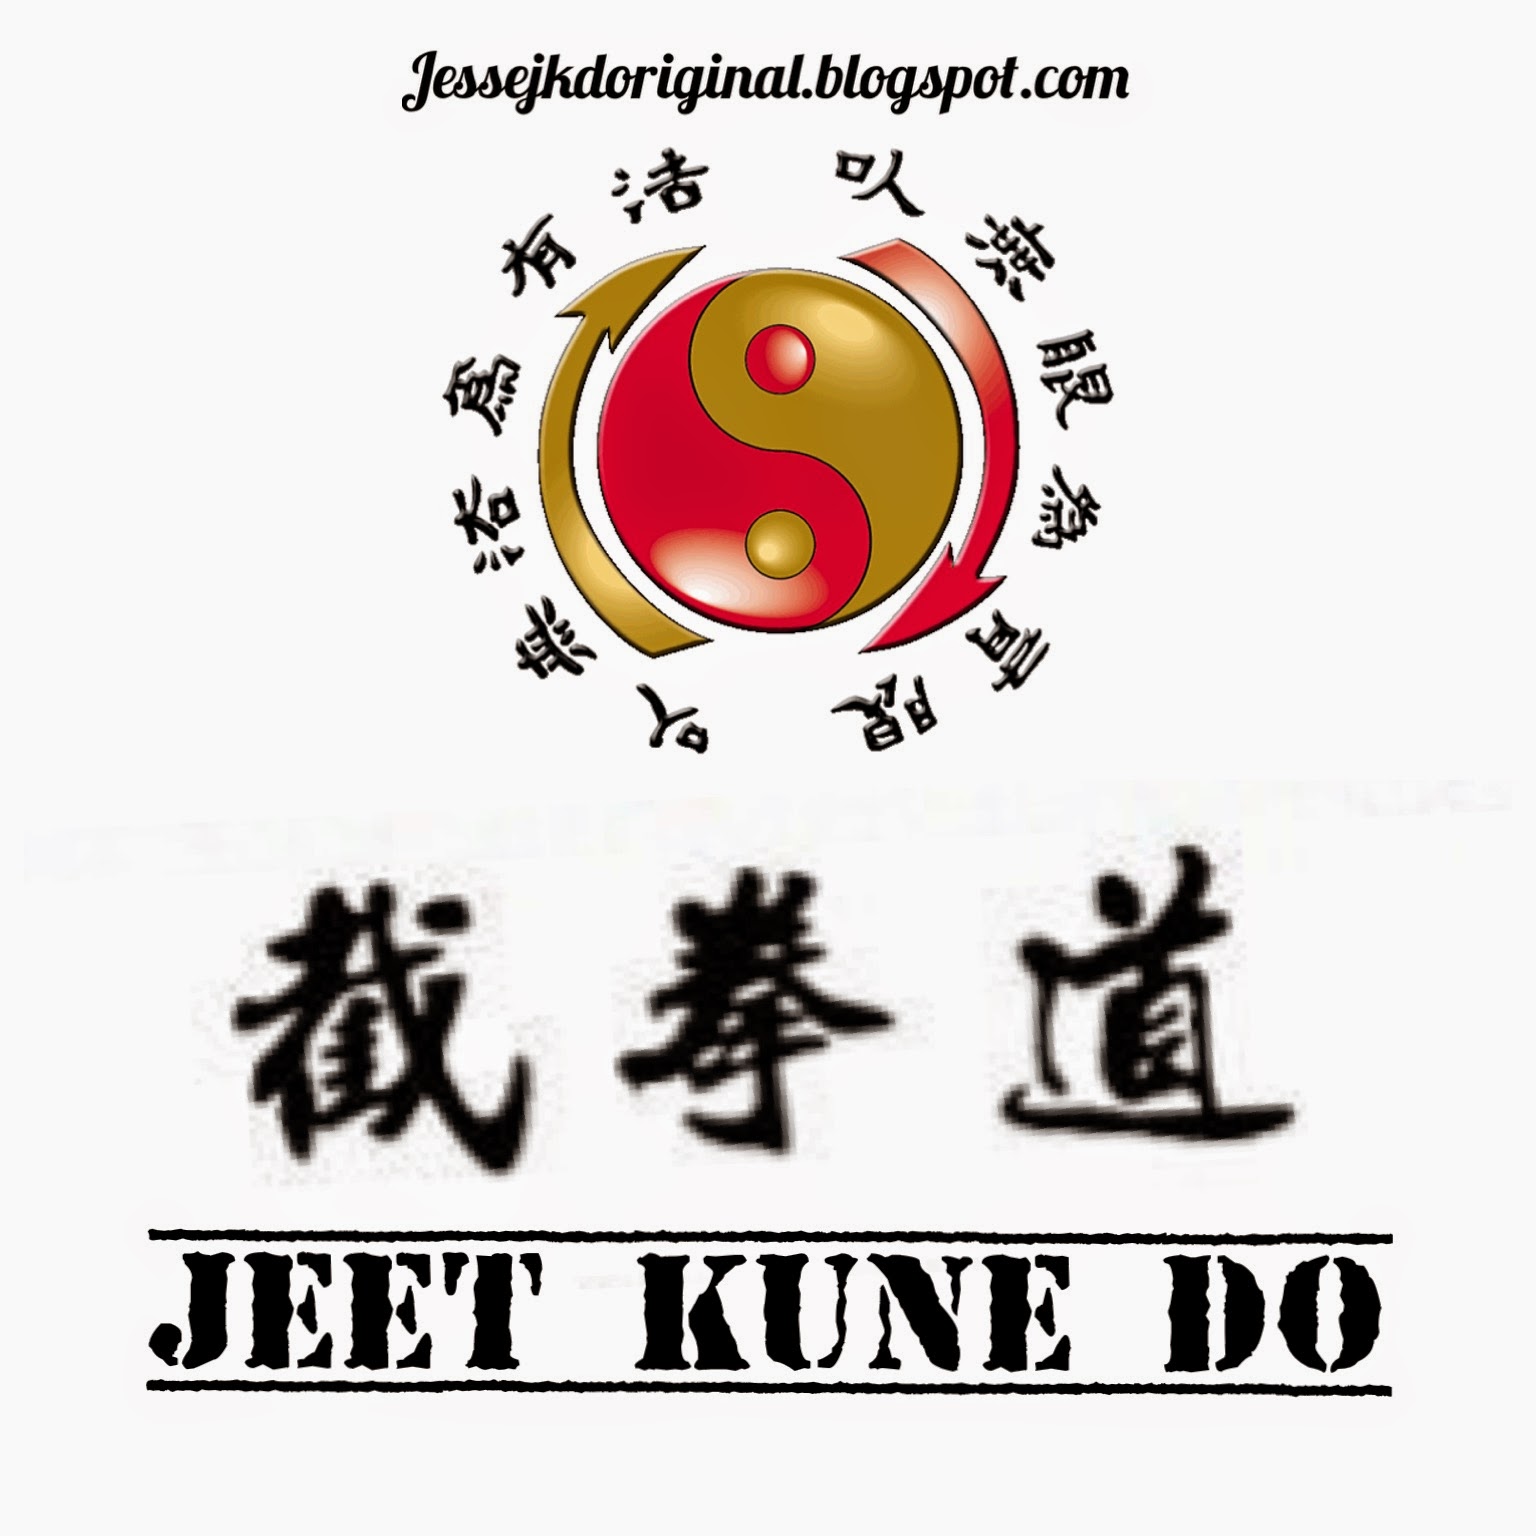 Jkd logo